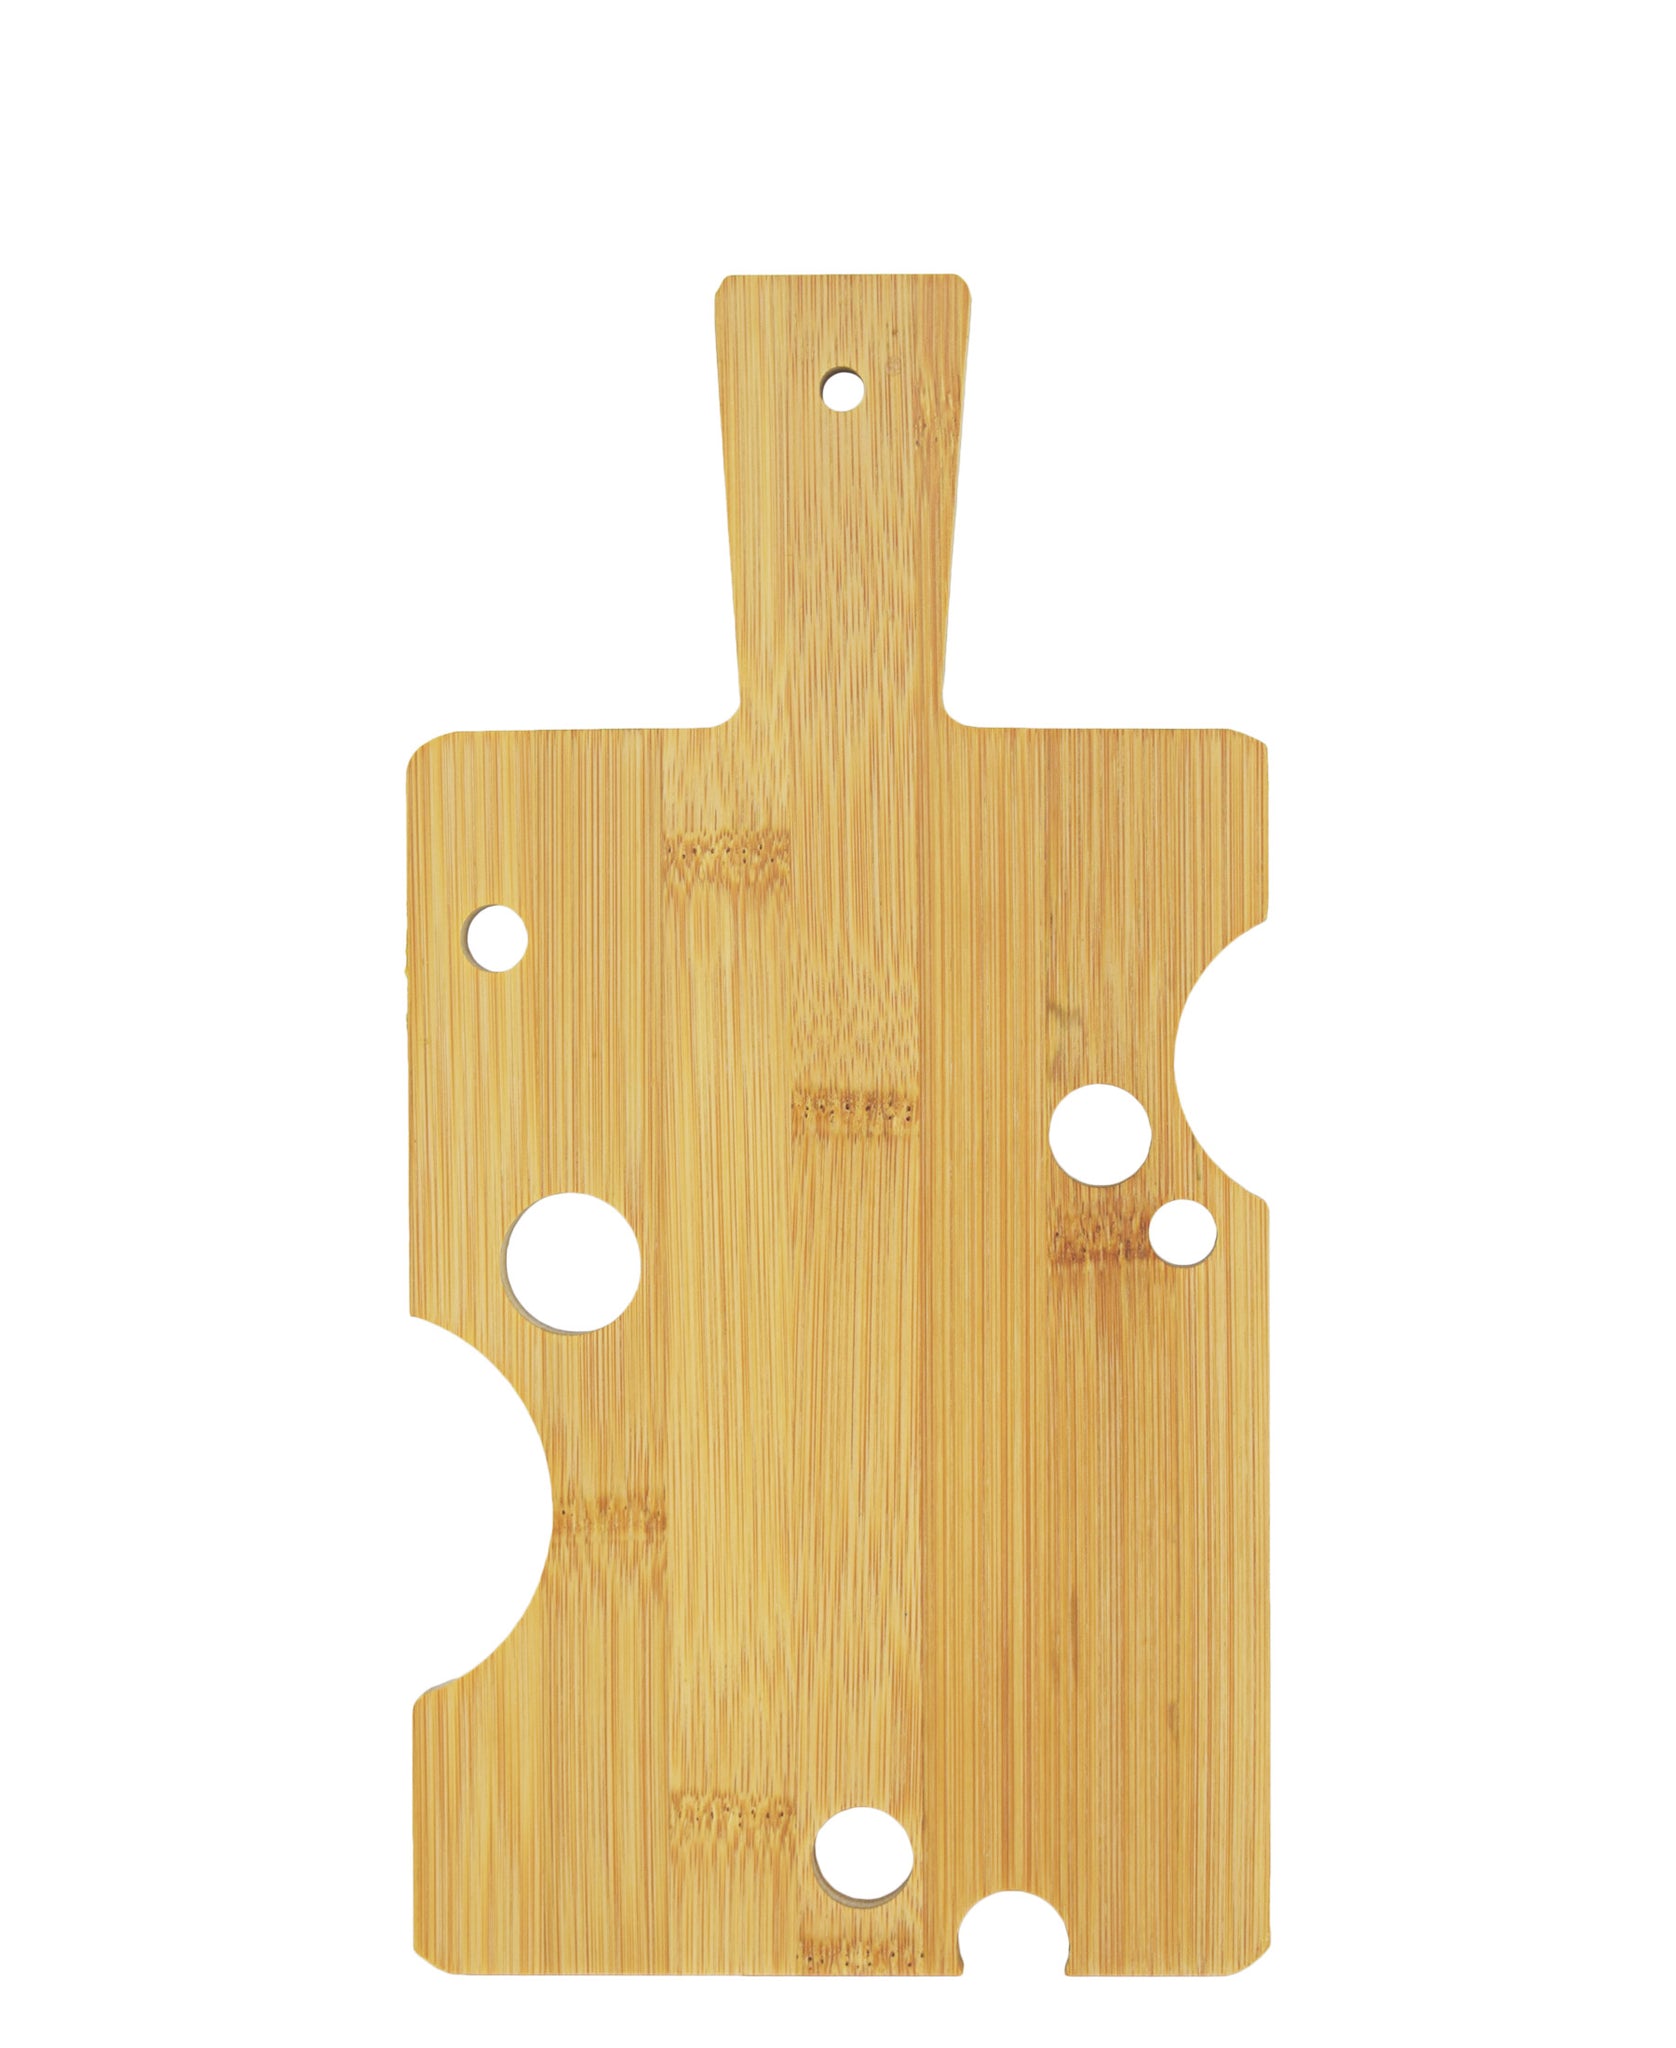 Bamboo Cheese Board 29cm - Oak